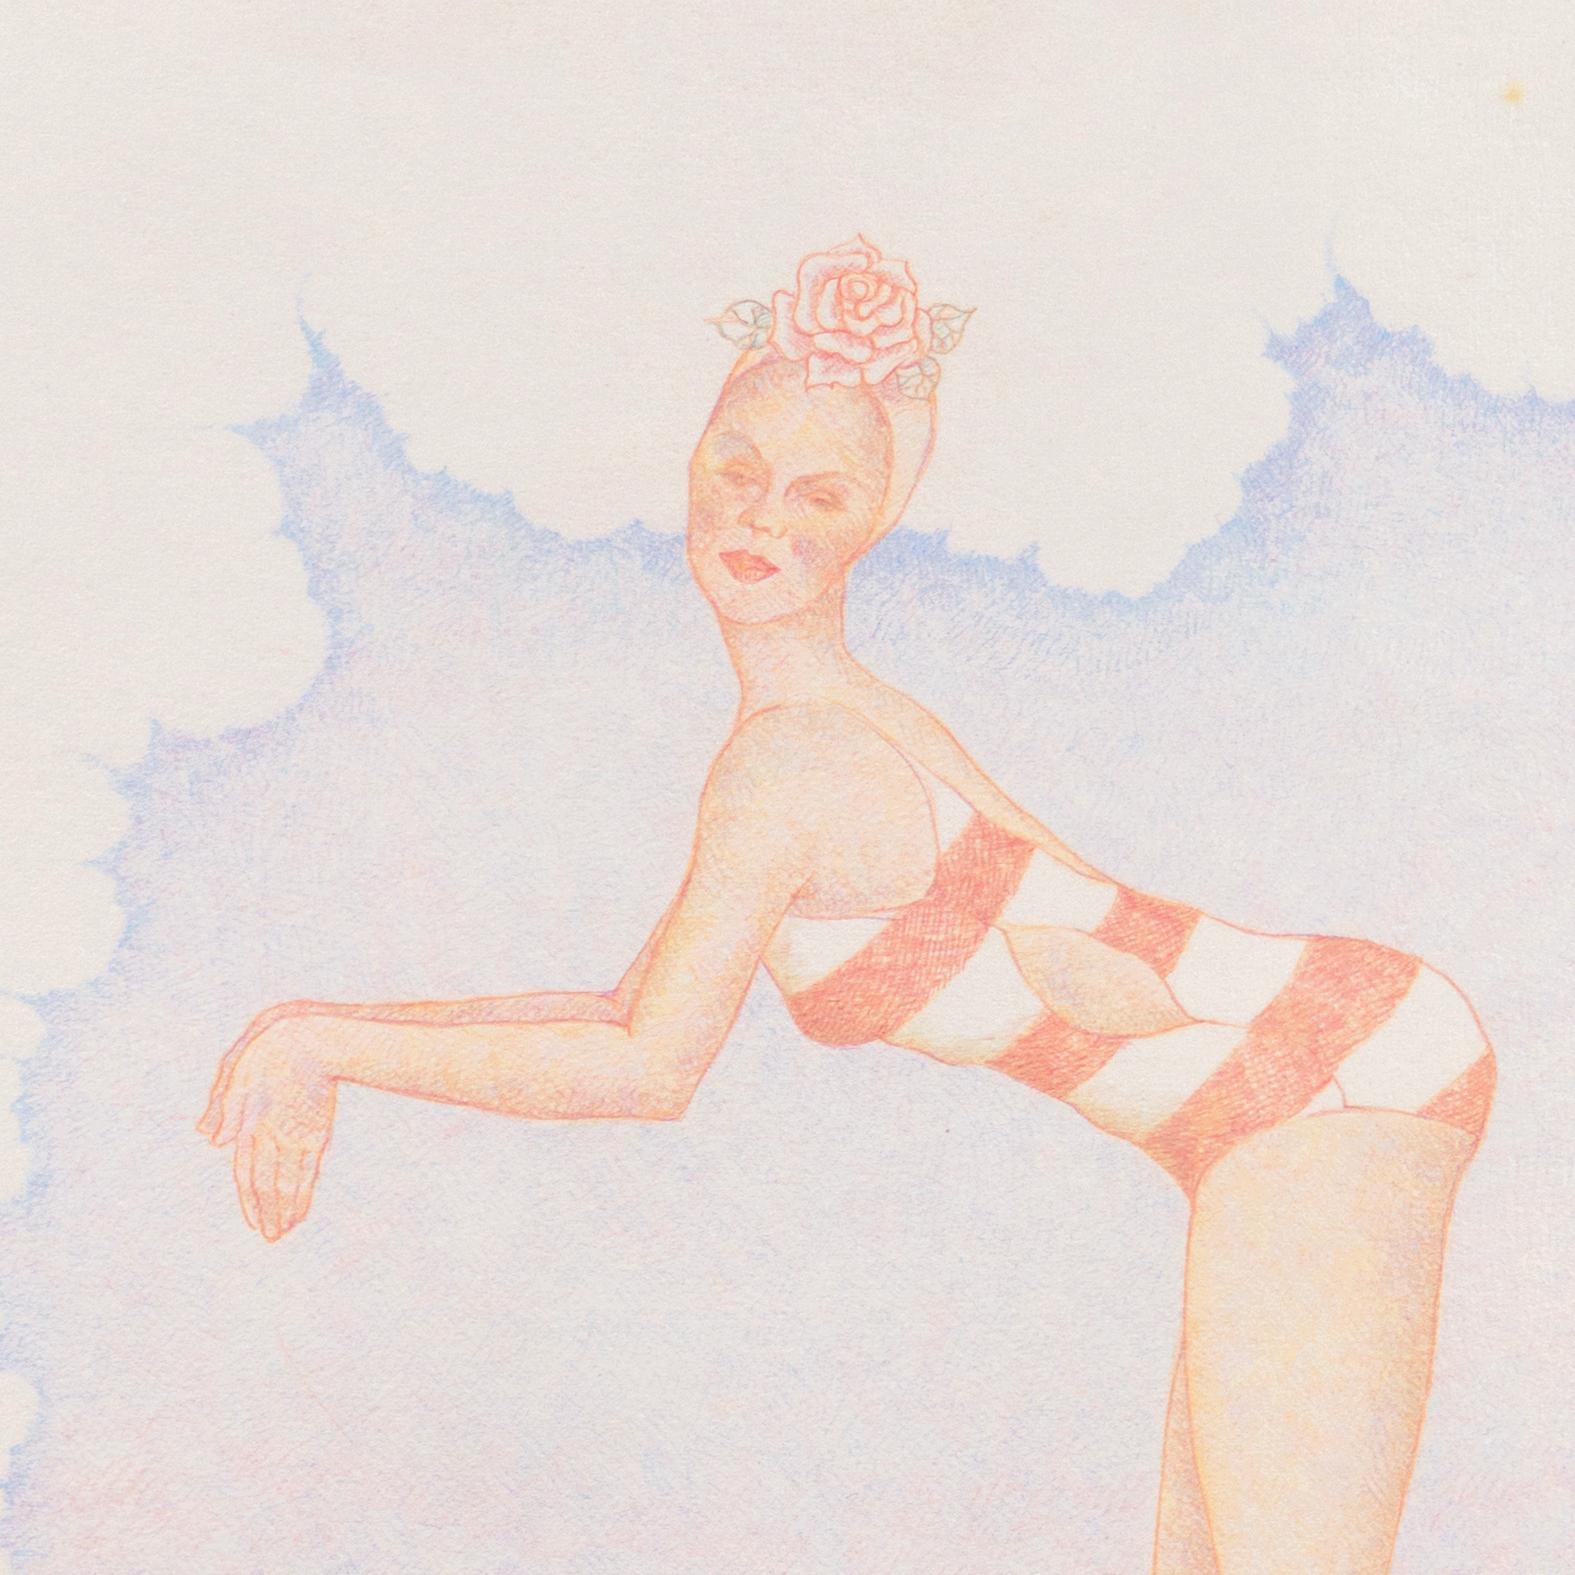 'U.S.S. Love', Swimming with Mermaids, Merman – Art von Roberta Loach